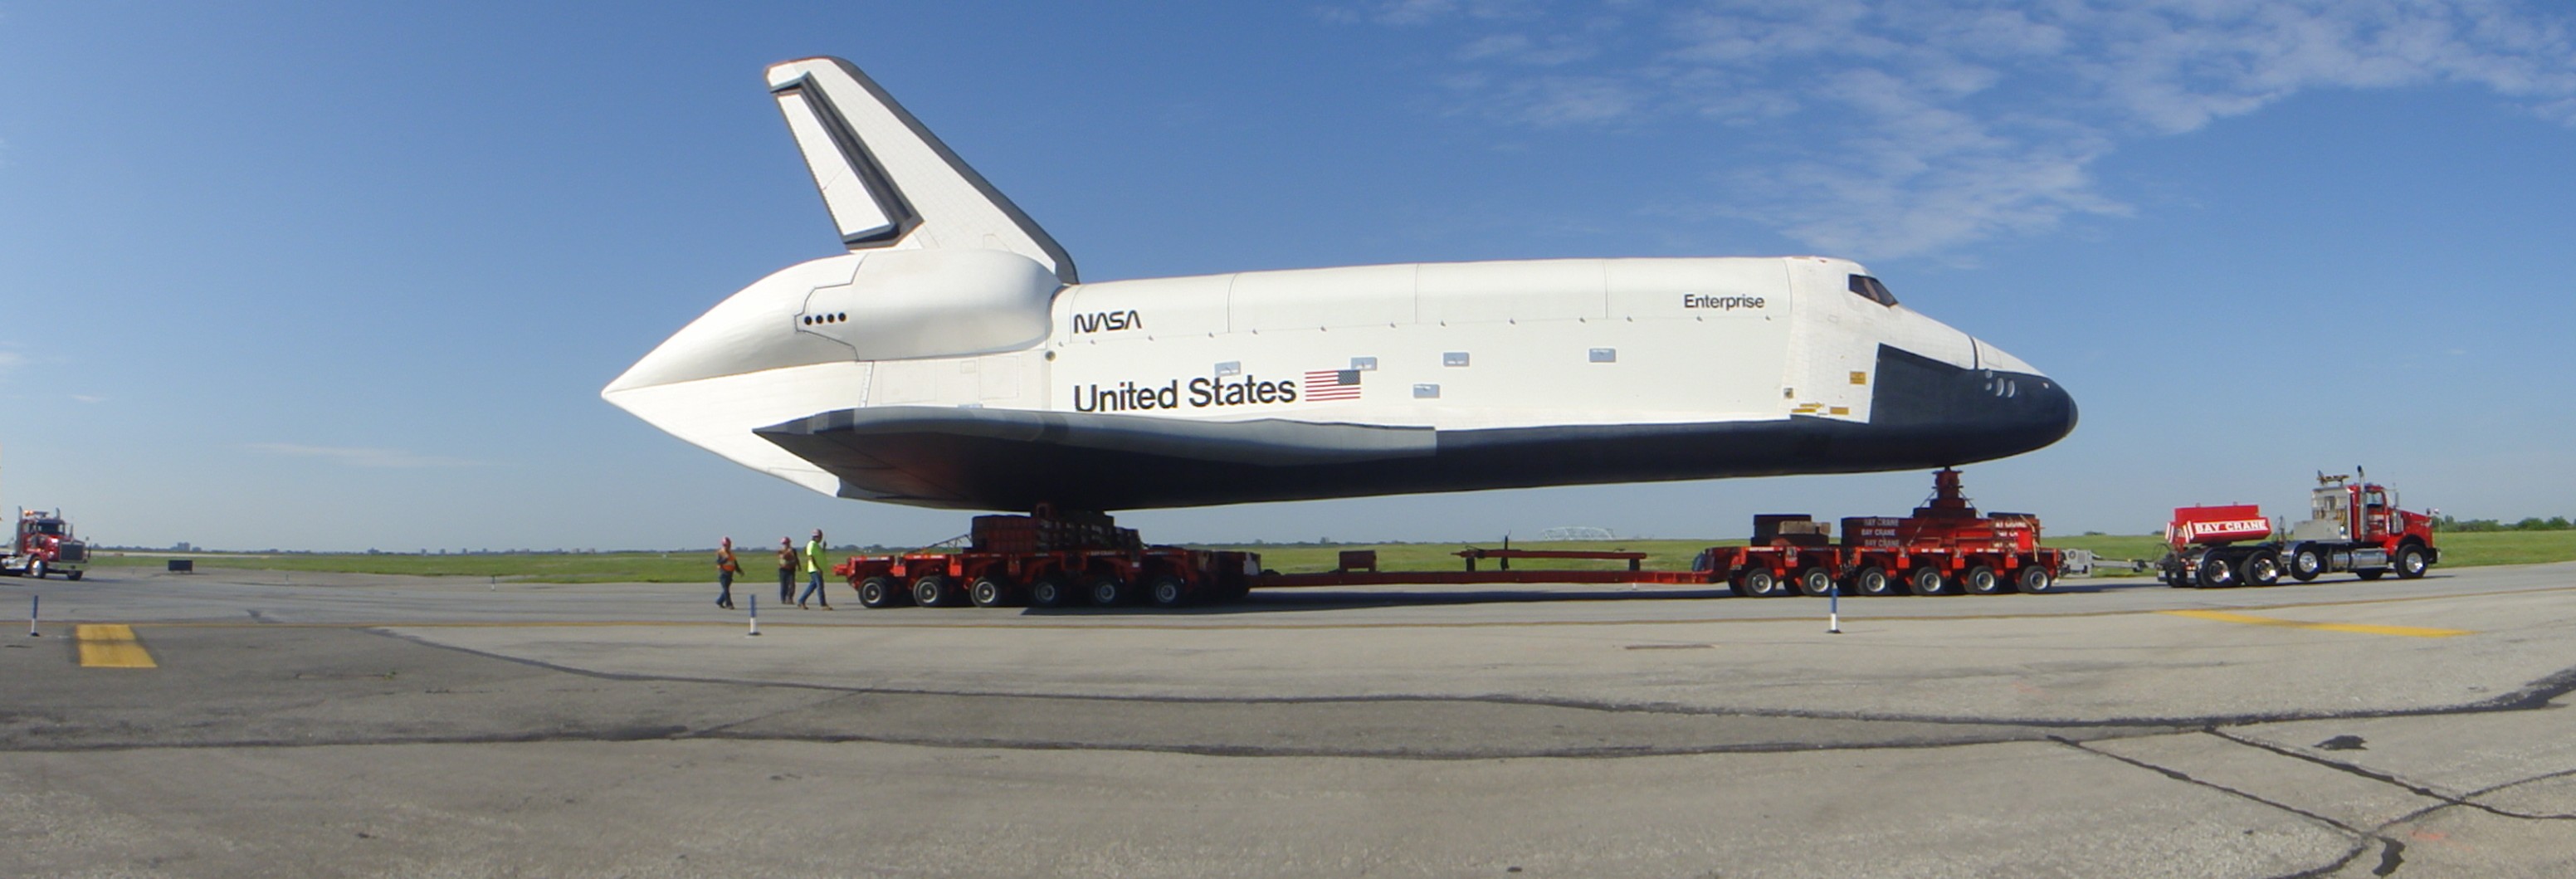 Goldhofer AG | Space Shuttle Enterprise goes on its last journey